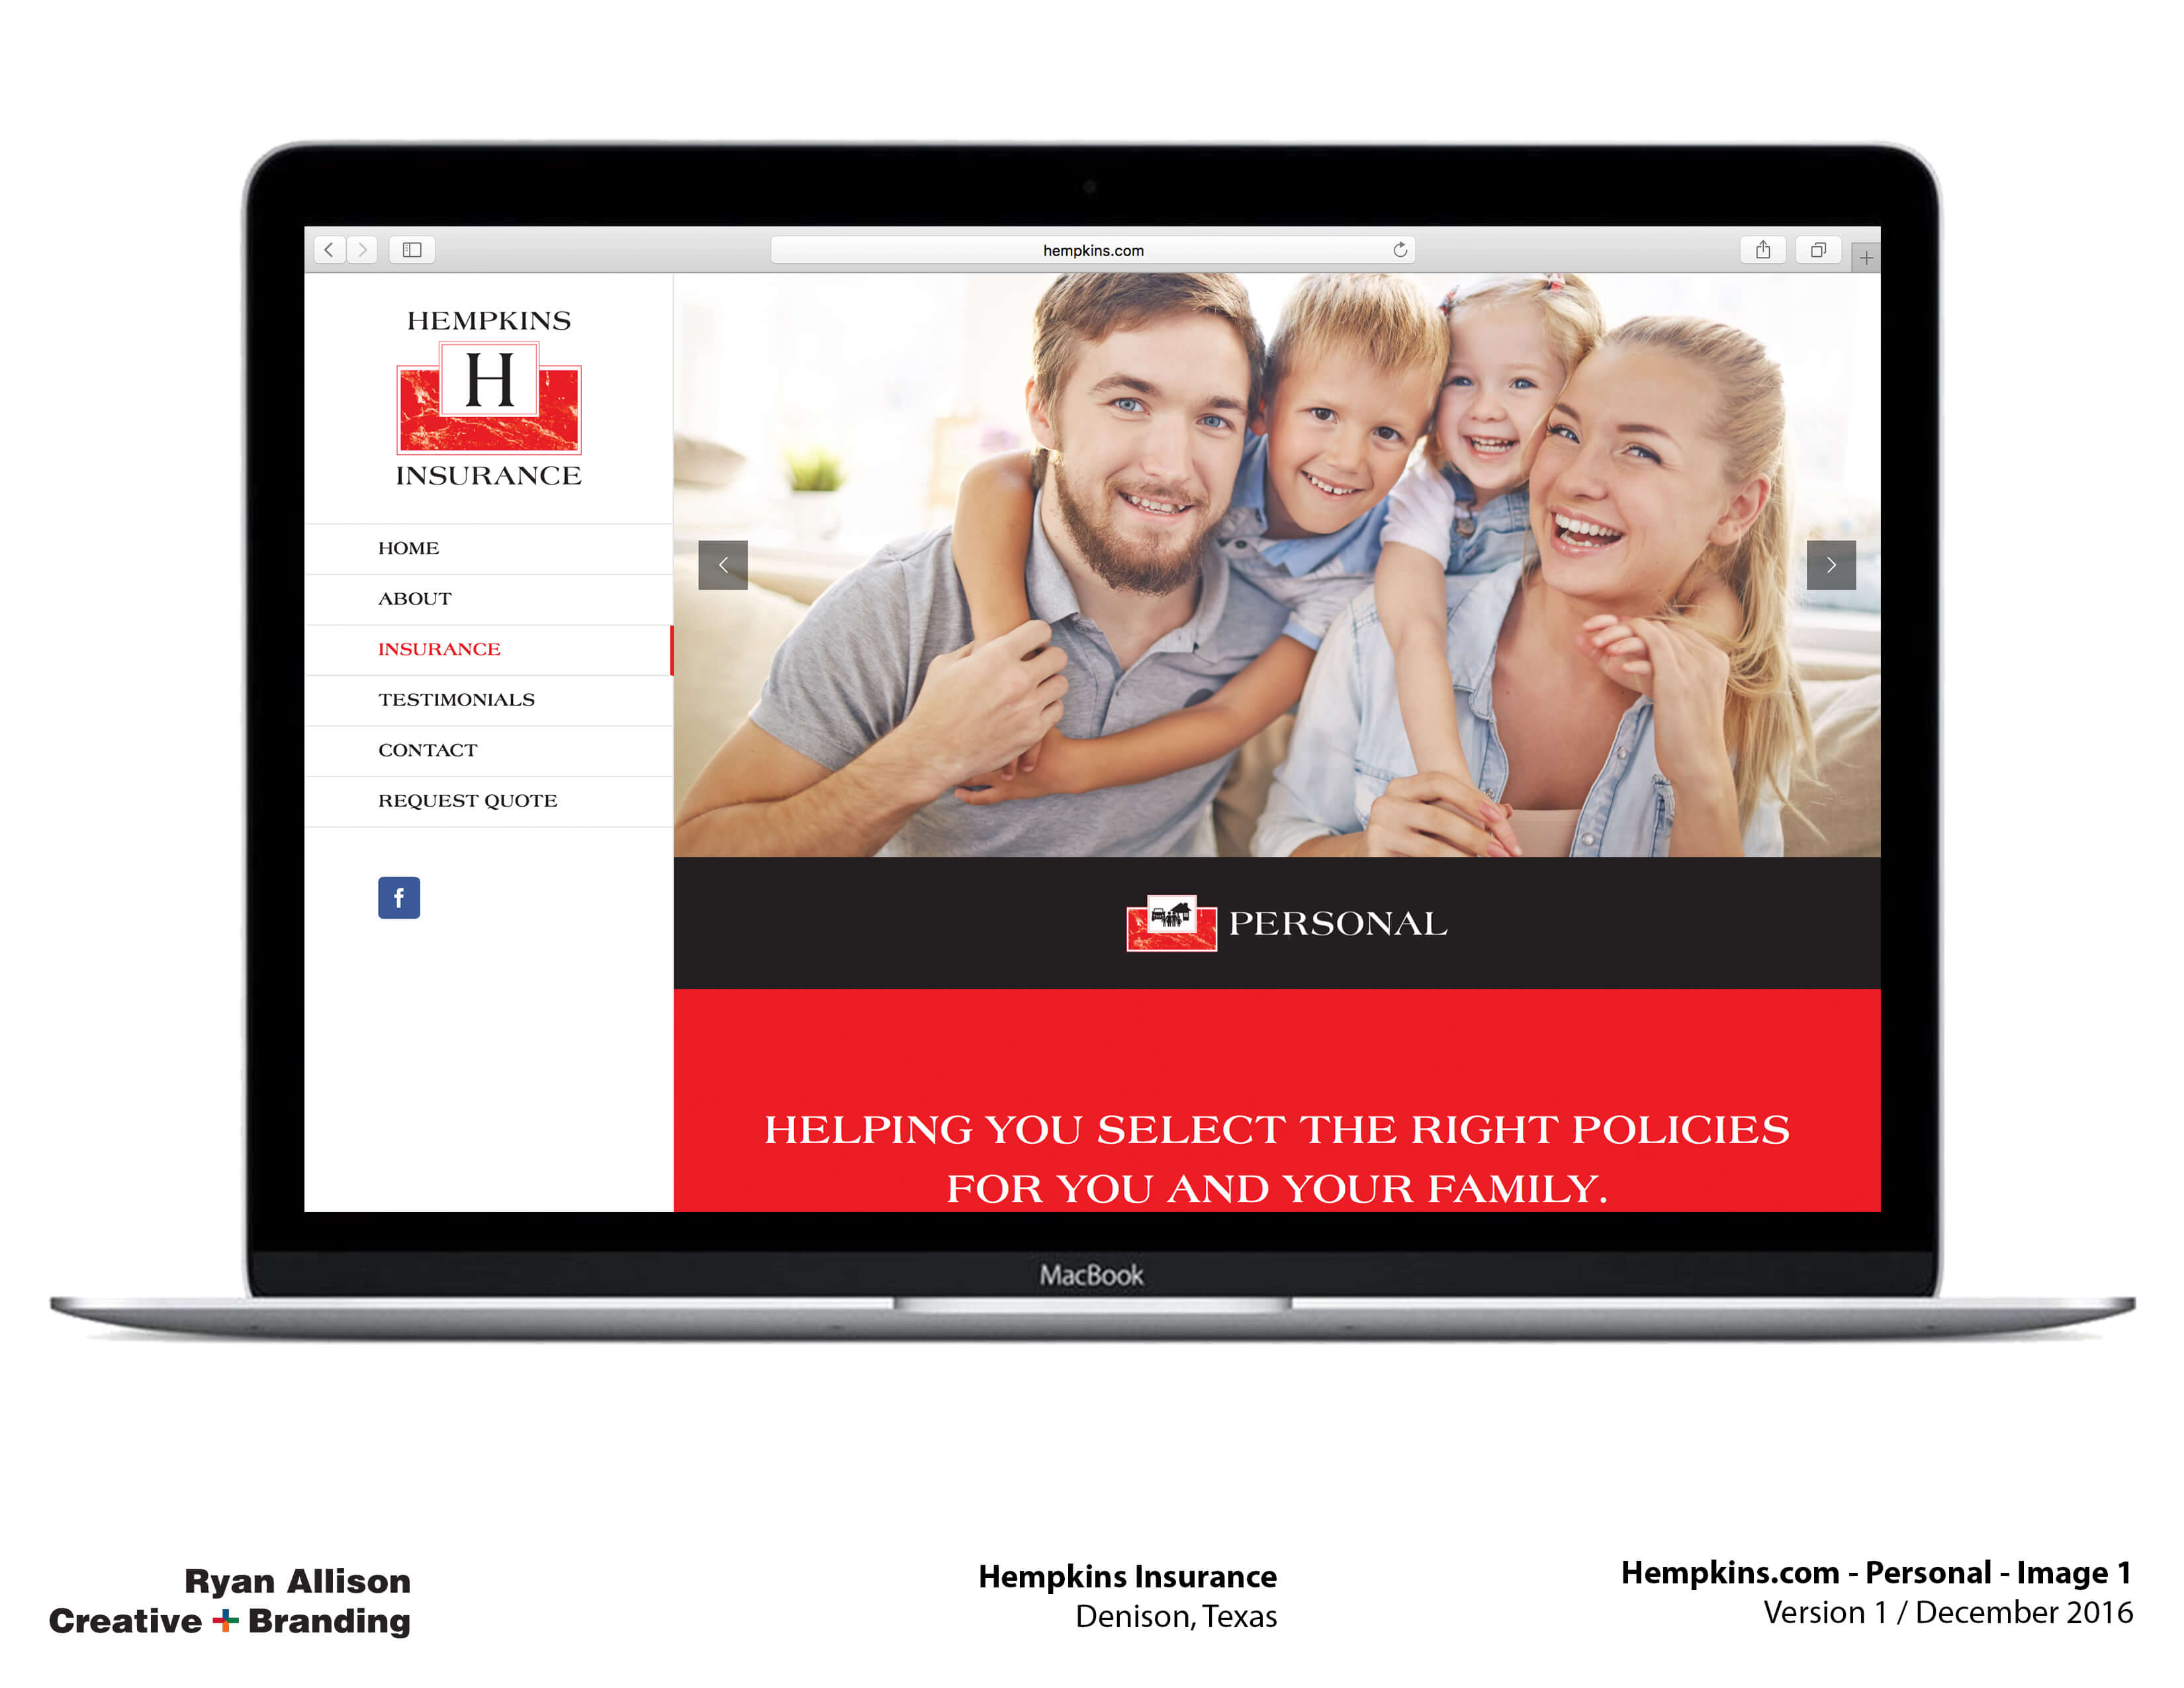 Hempkins Insurance Website Personal 1 - Project - Ryan Allison Creative + Branding